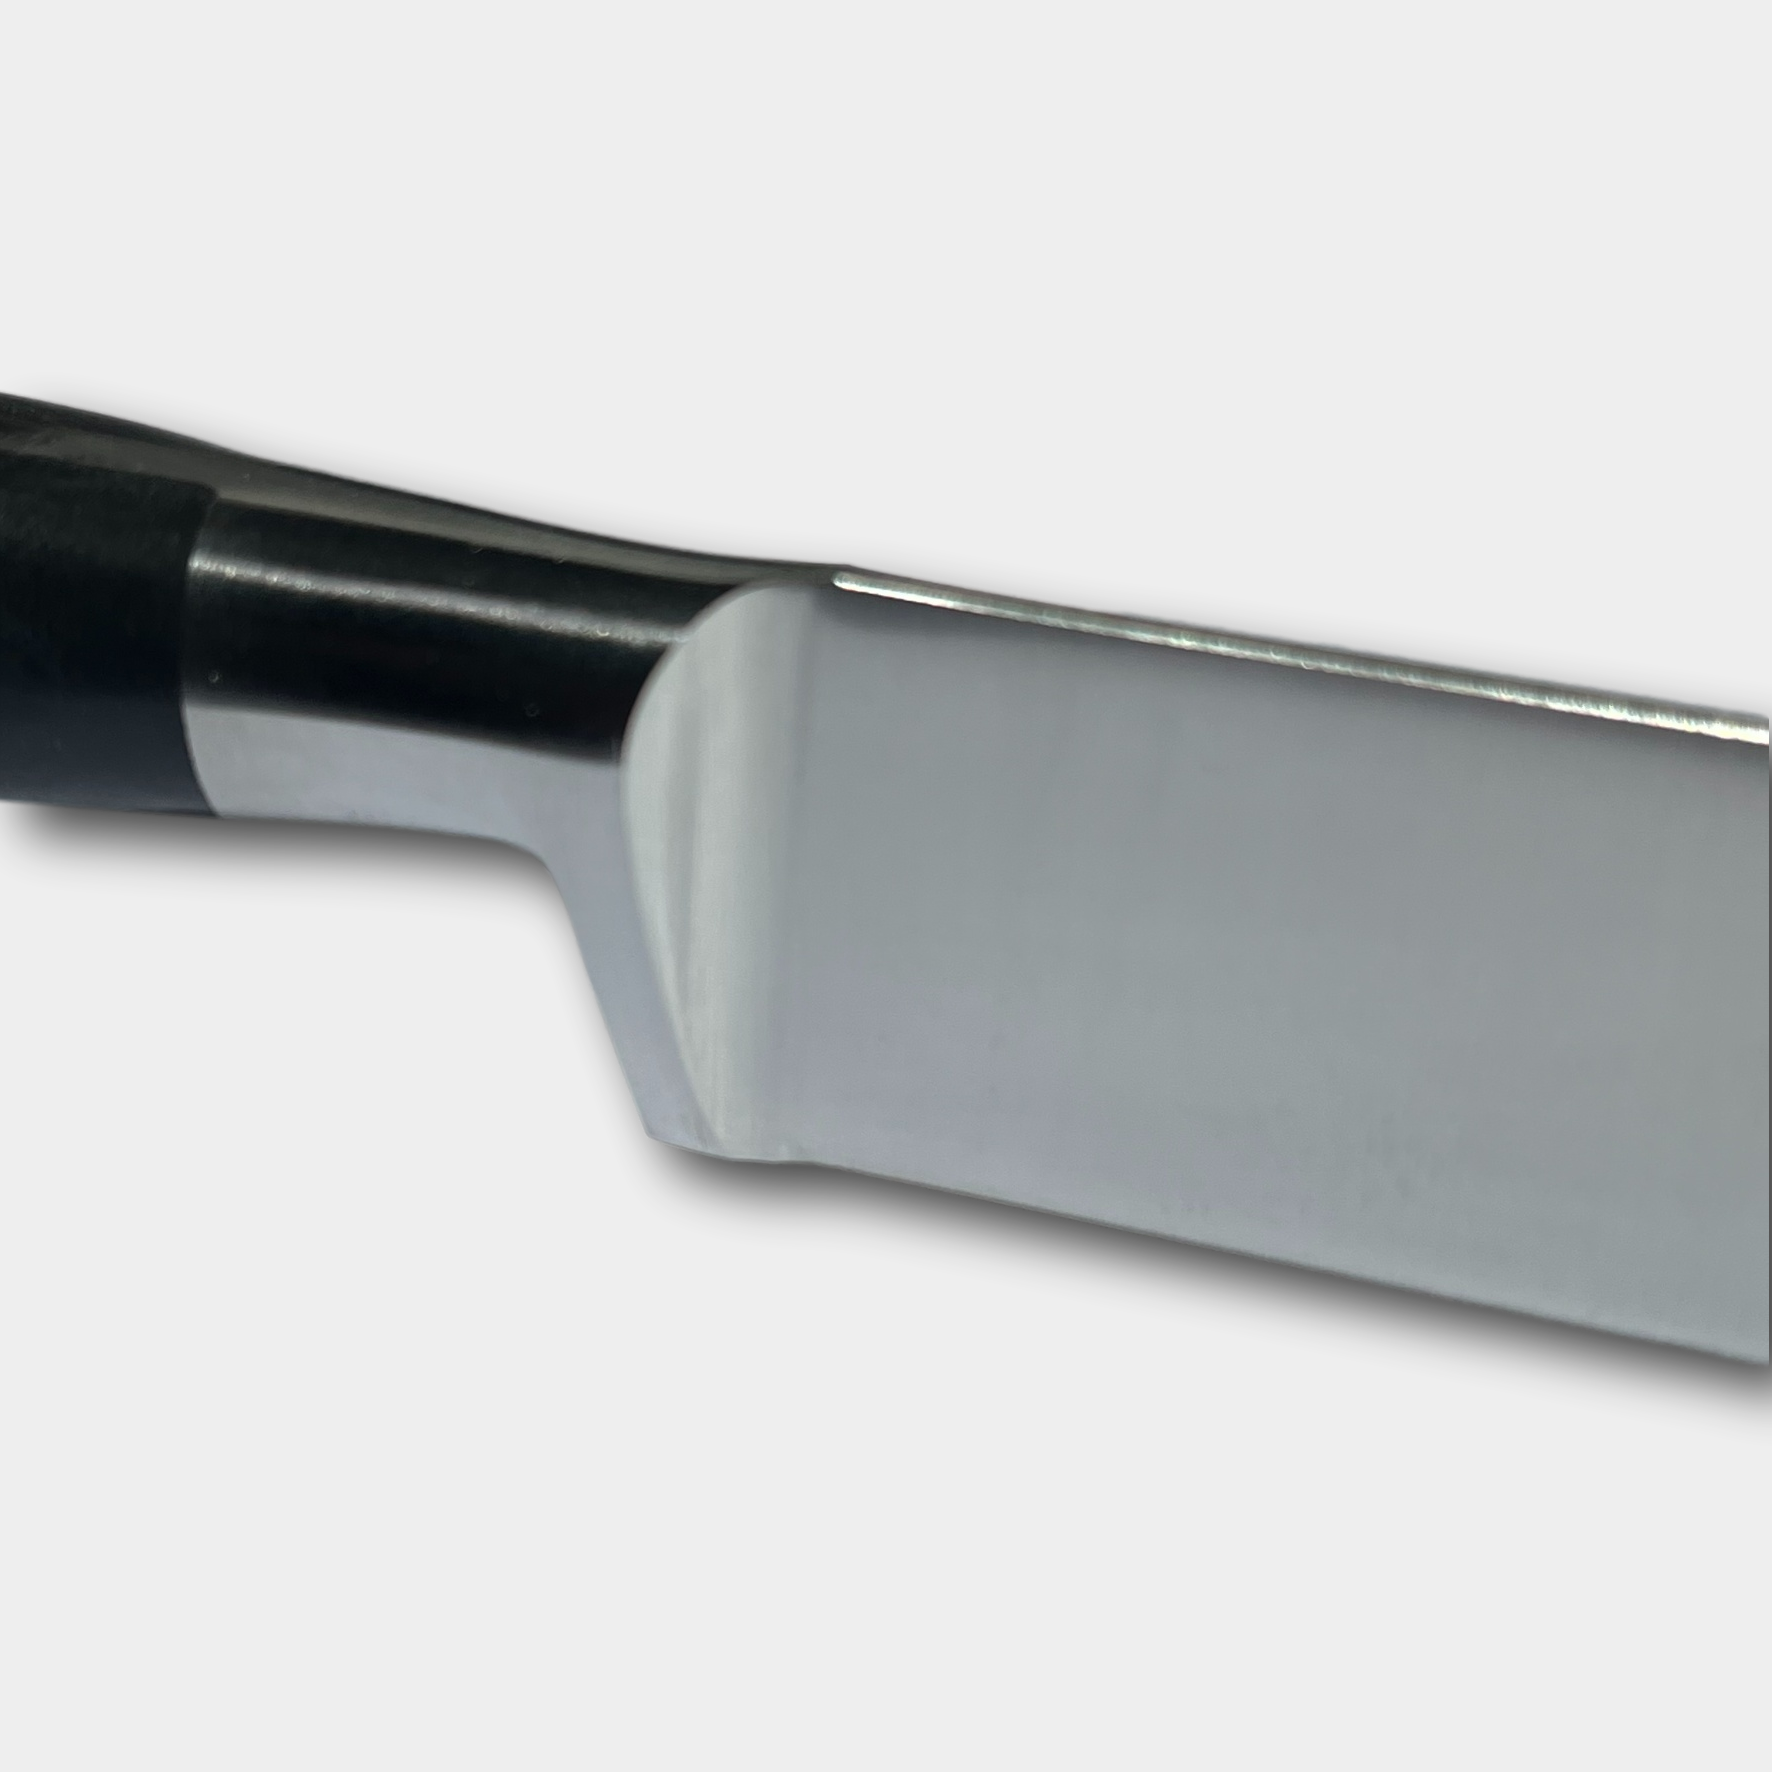 Lion Sabtier Ideal Steel 13cm Steak Knife